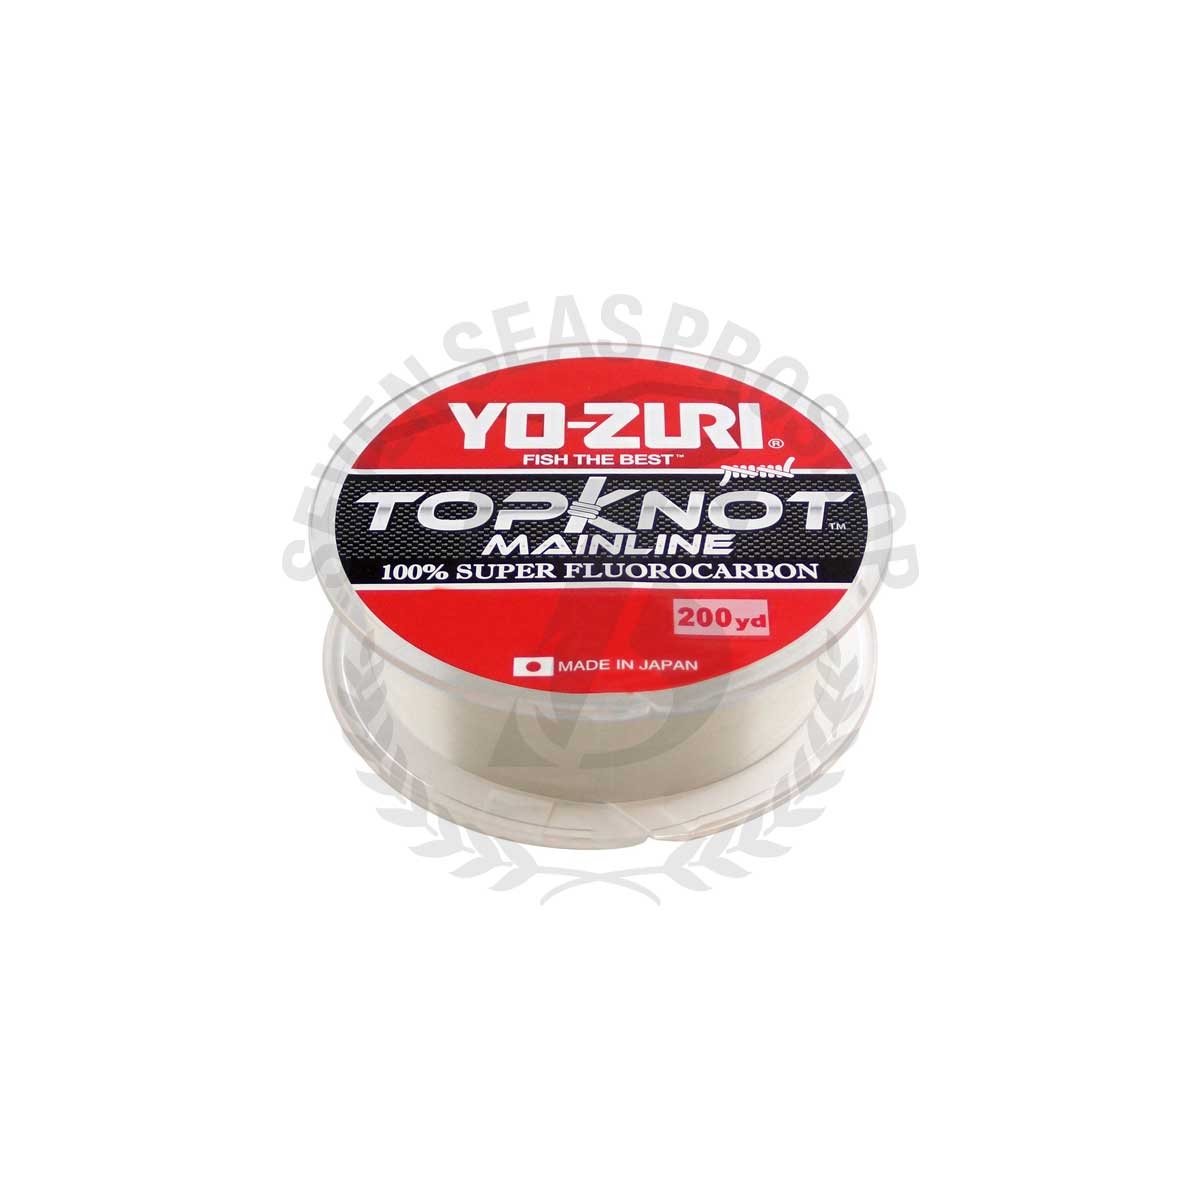 Yo-Zuri Top Knot Mainline 100% Super Fluorocarbon 200yds #R1223